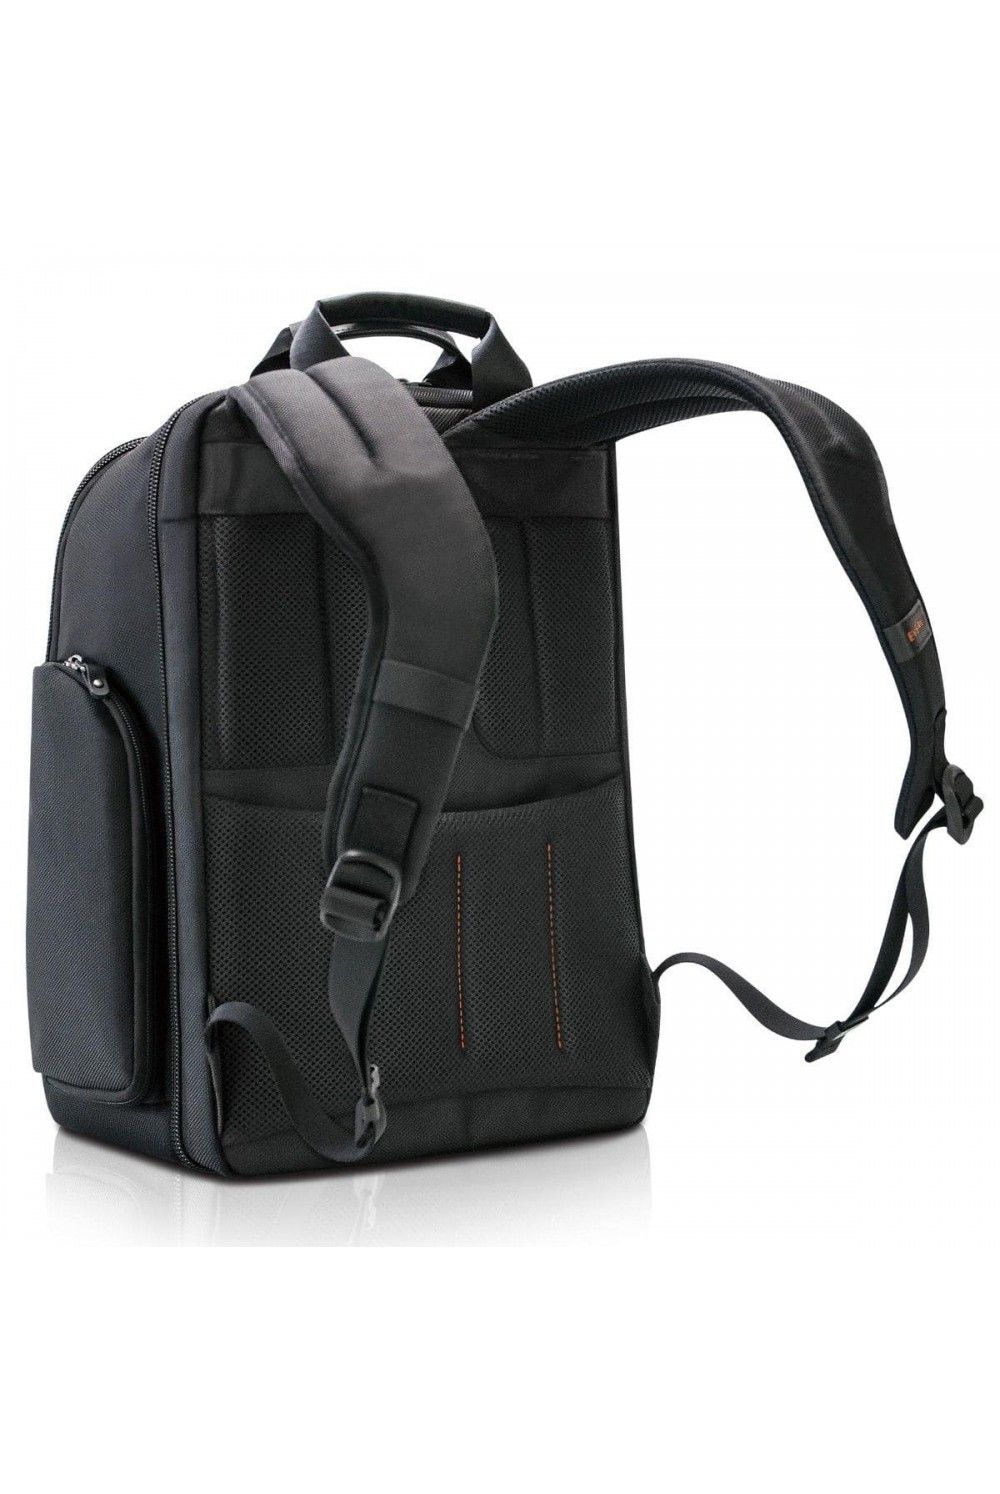 Premium Laptop Backpack Onyx Everki 17.3 inches